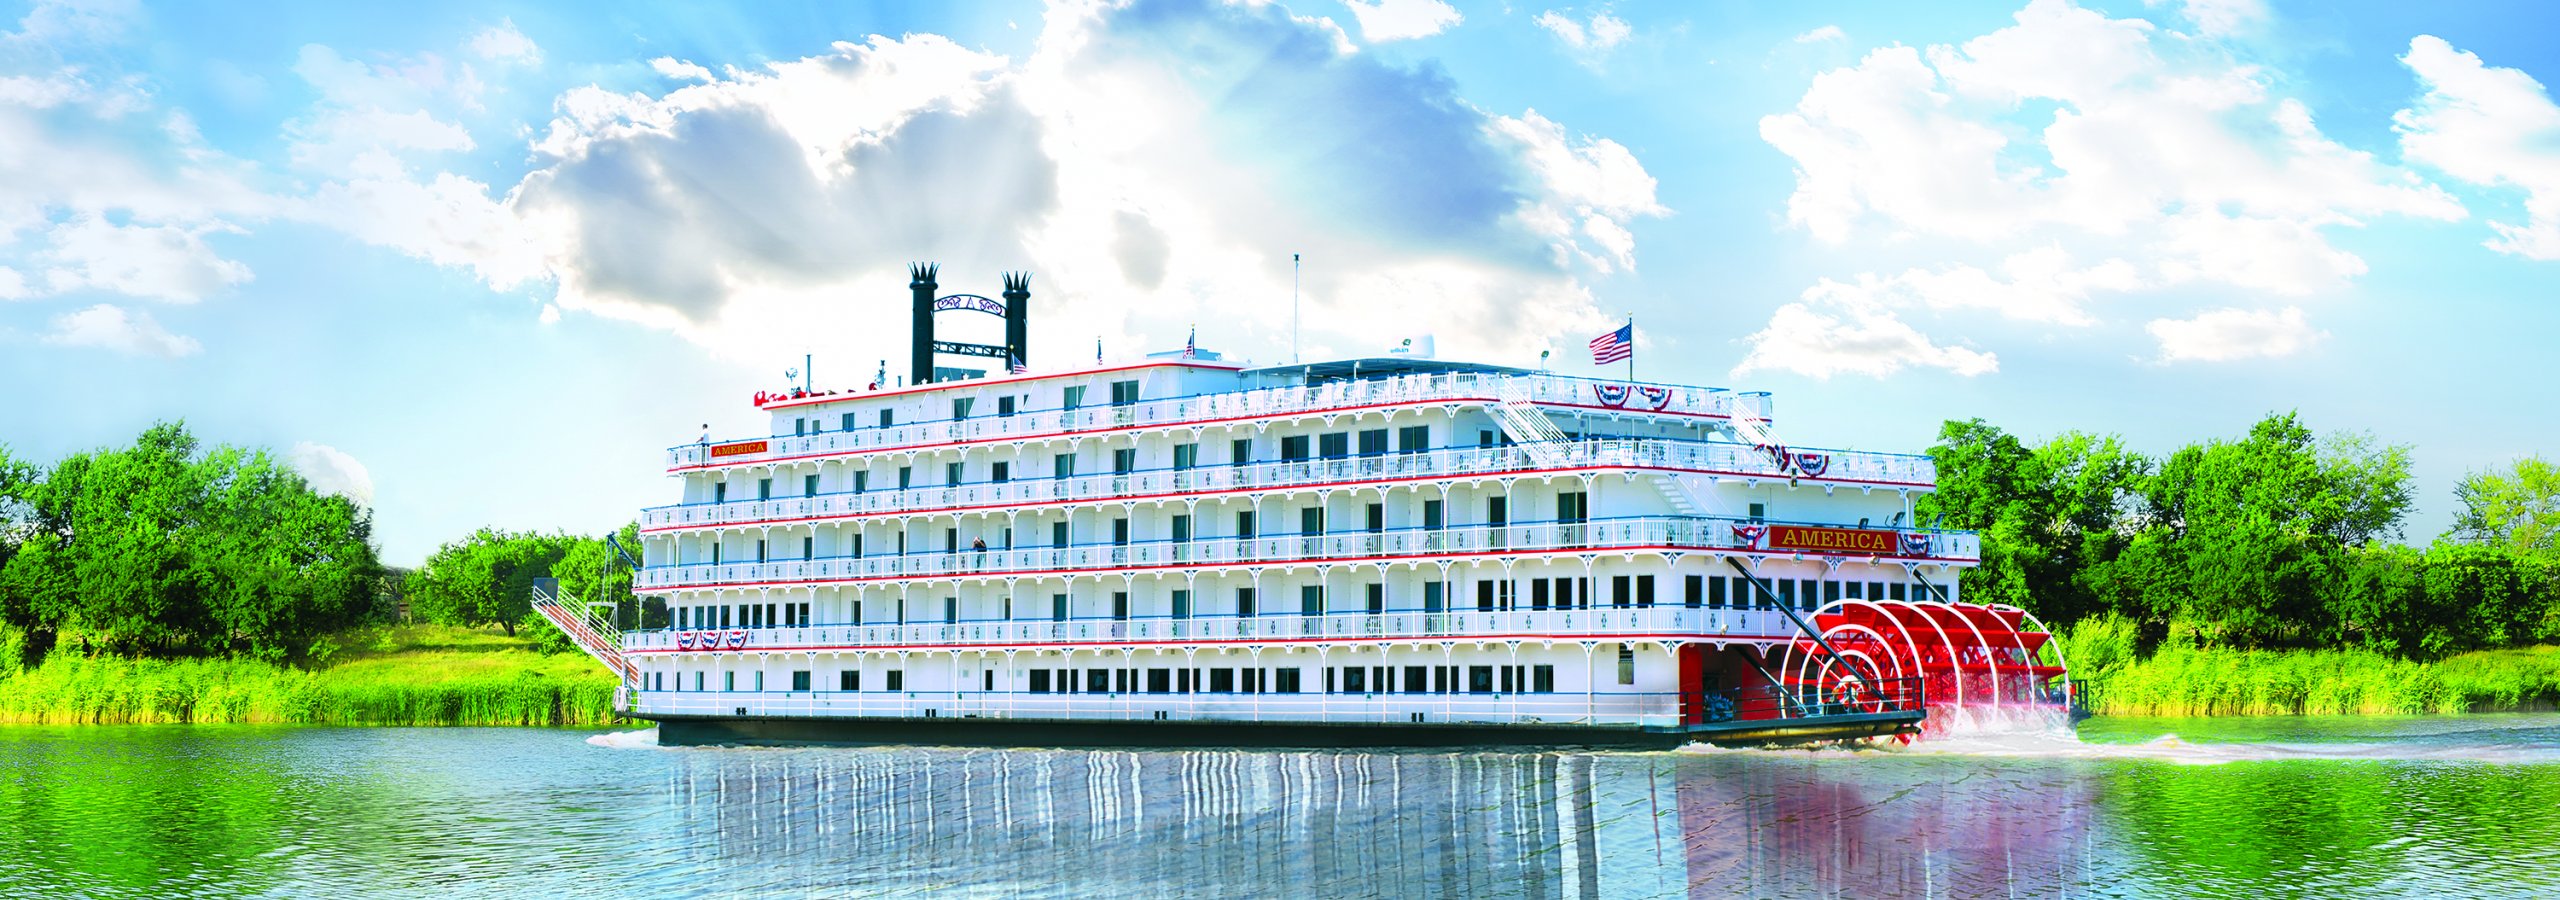 senior river cruises usa